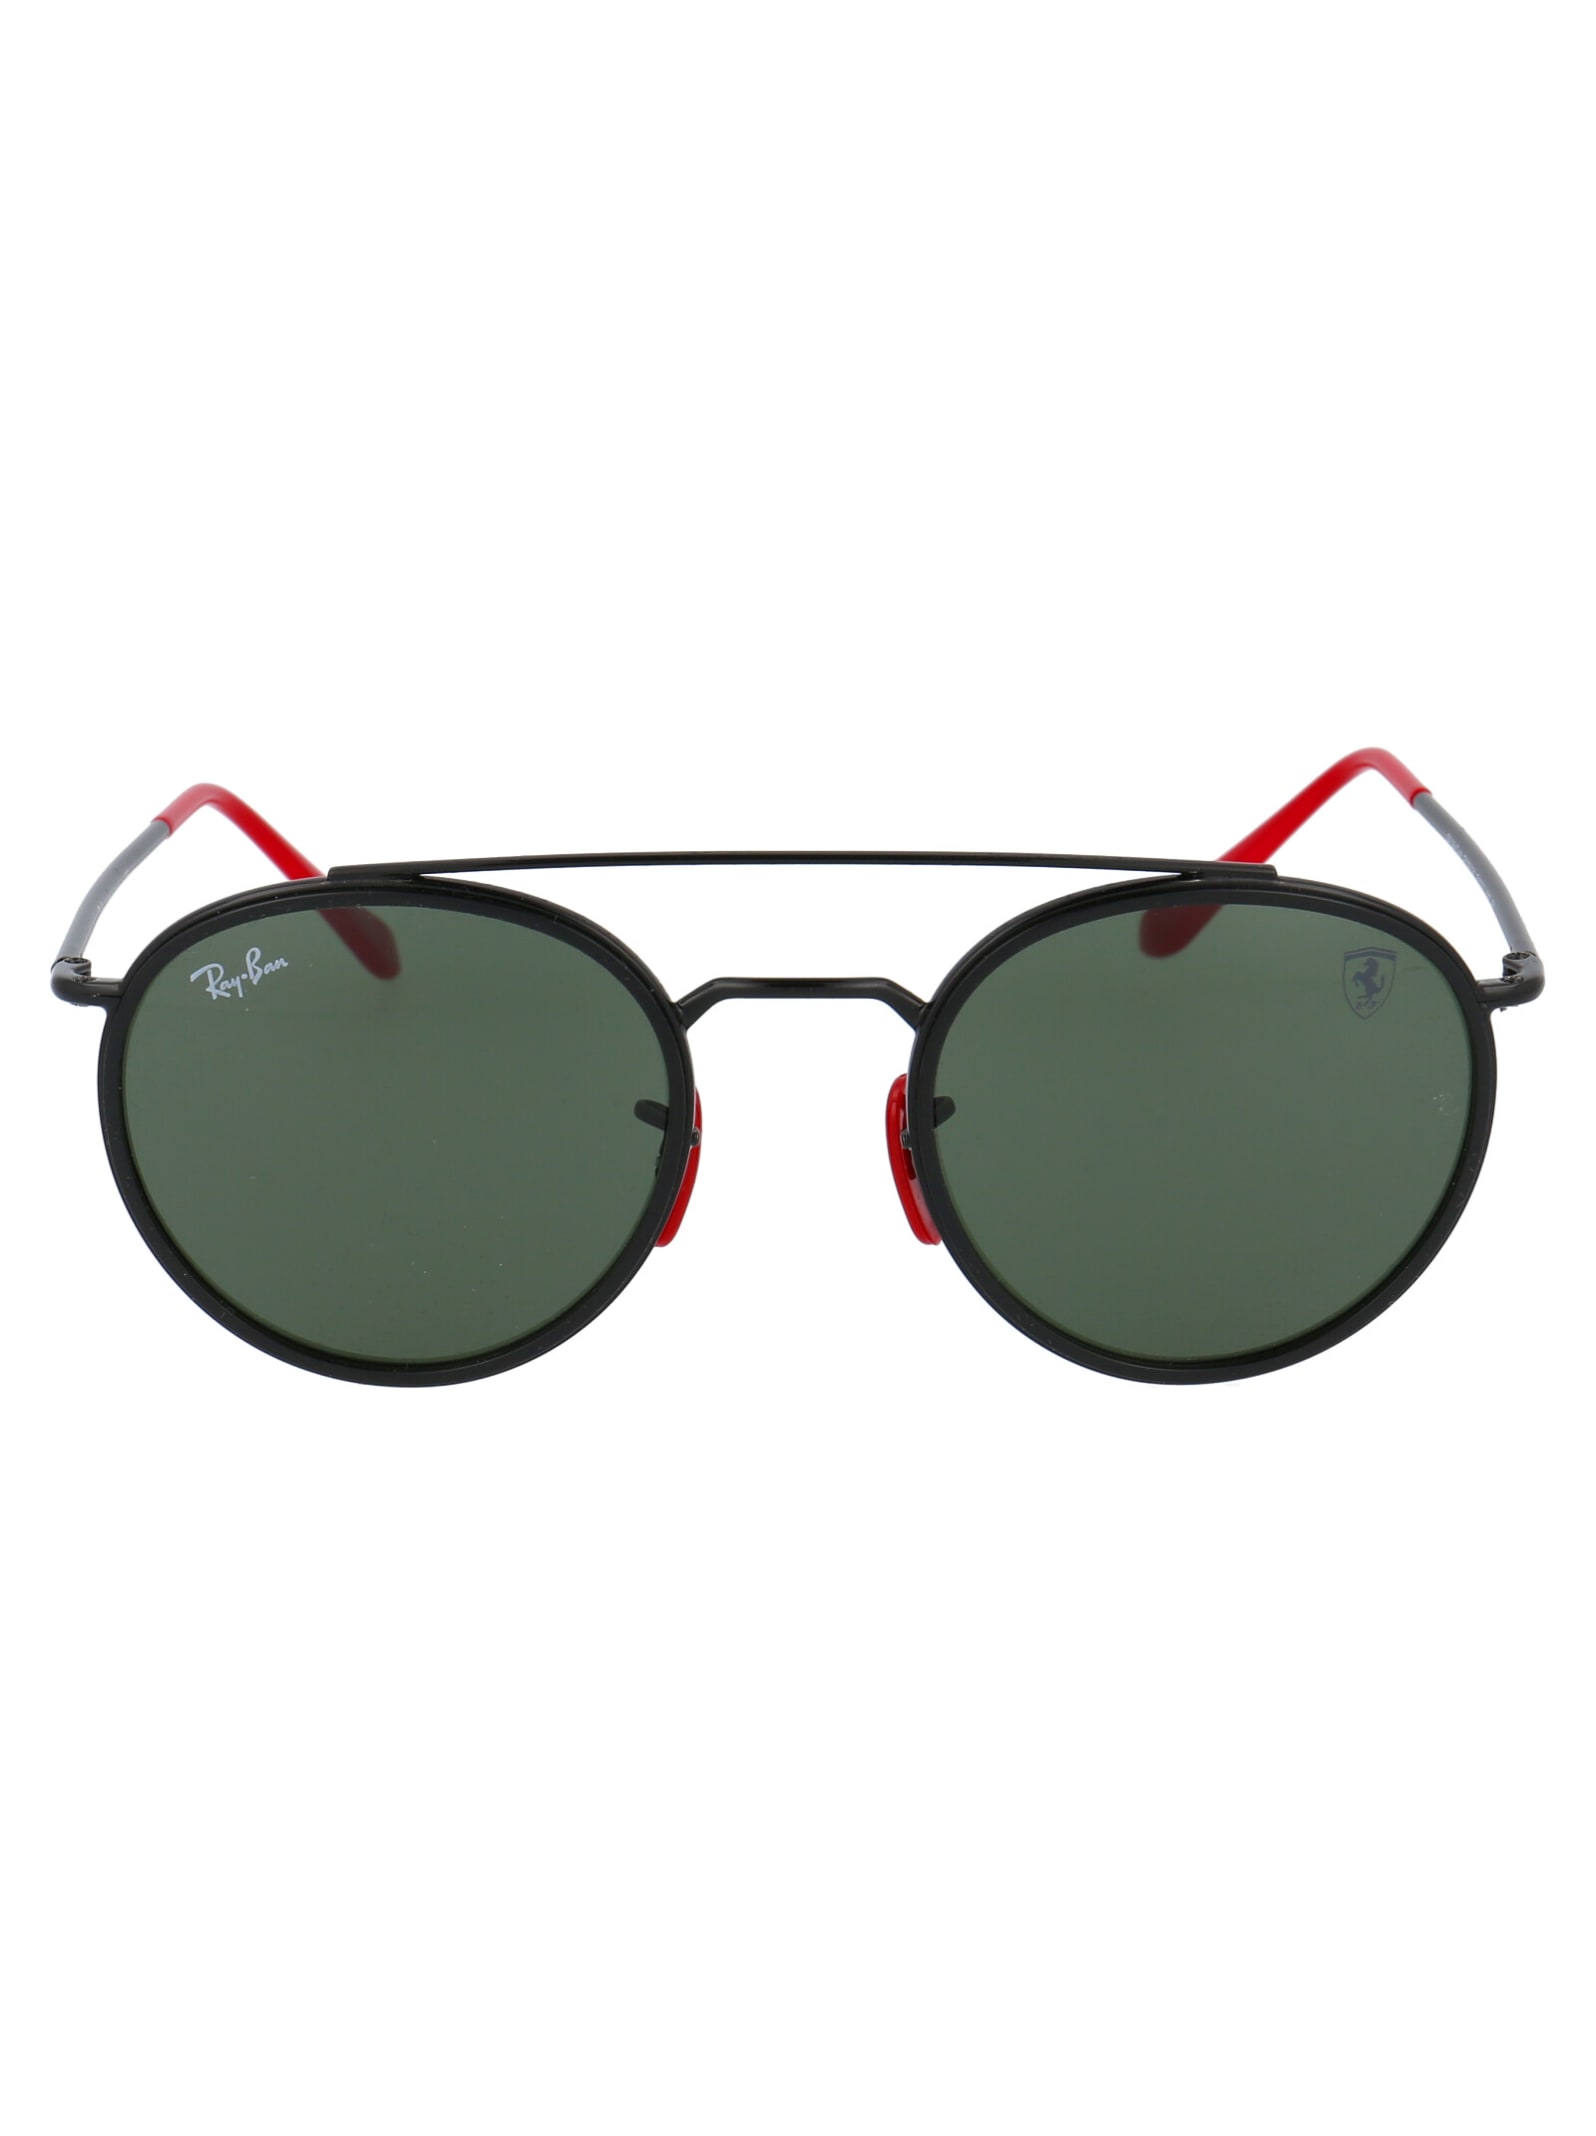 Ray-Ban Ferrari Sunglasses